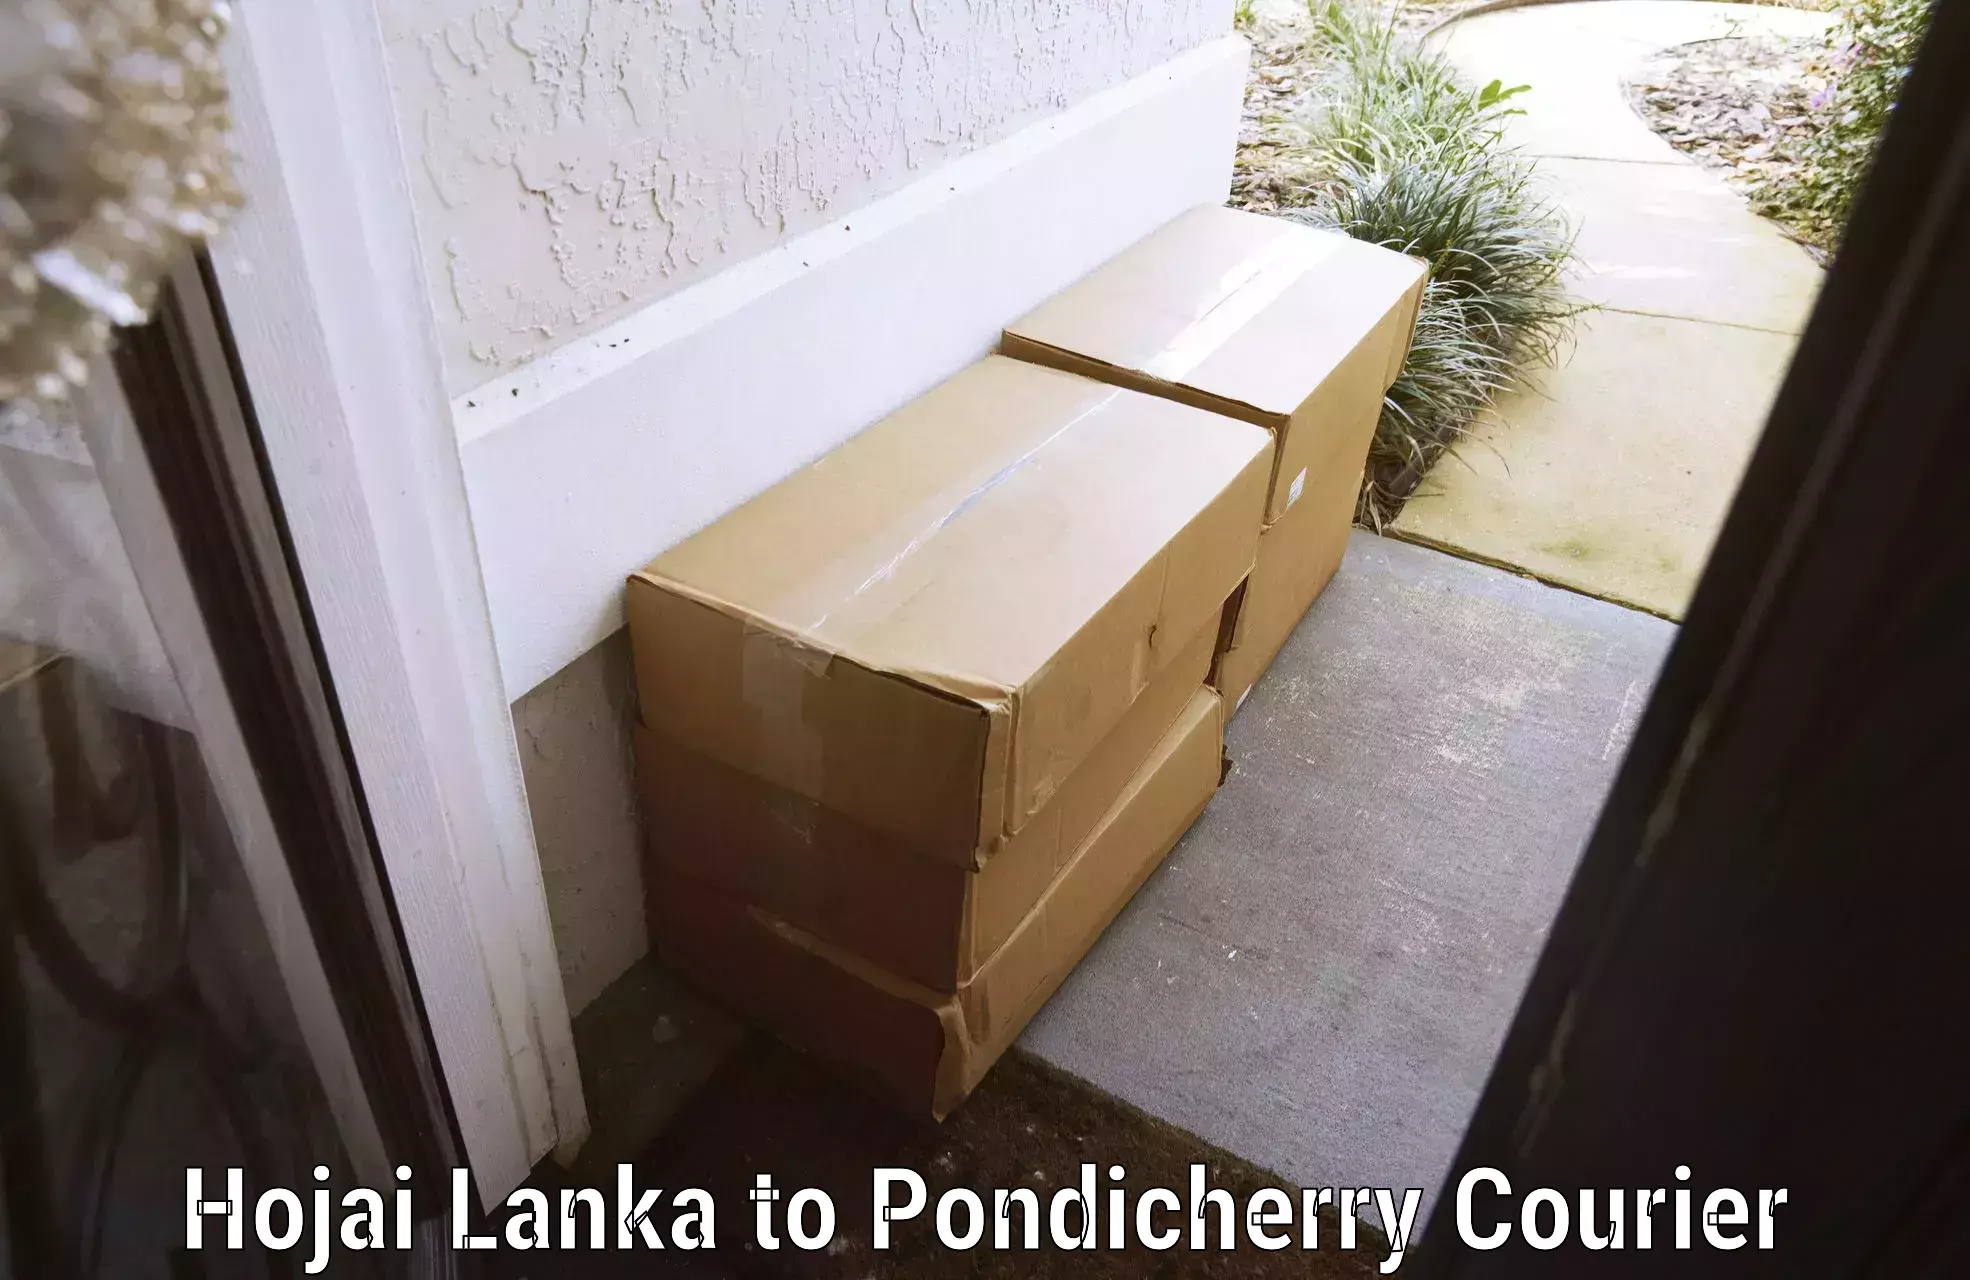 Express luggage delivery Hojai Lanka to Pondicherry University